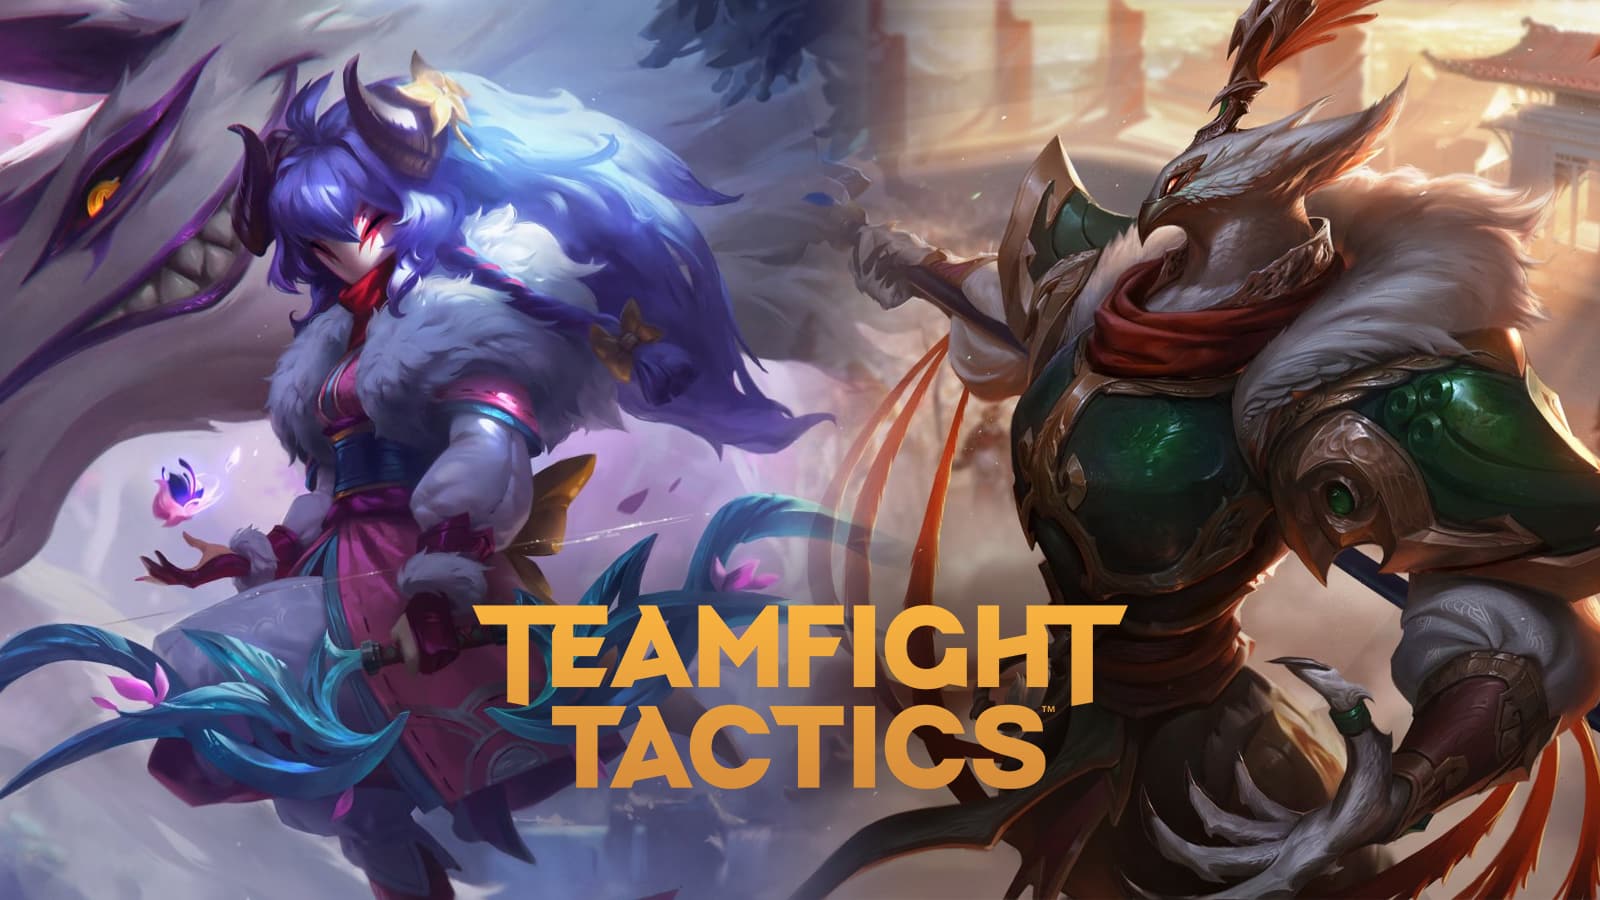 Teamfight Tactics Patch Notes - League of Legends